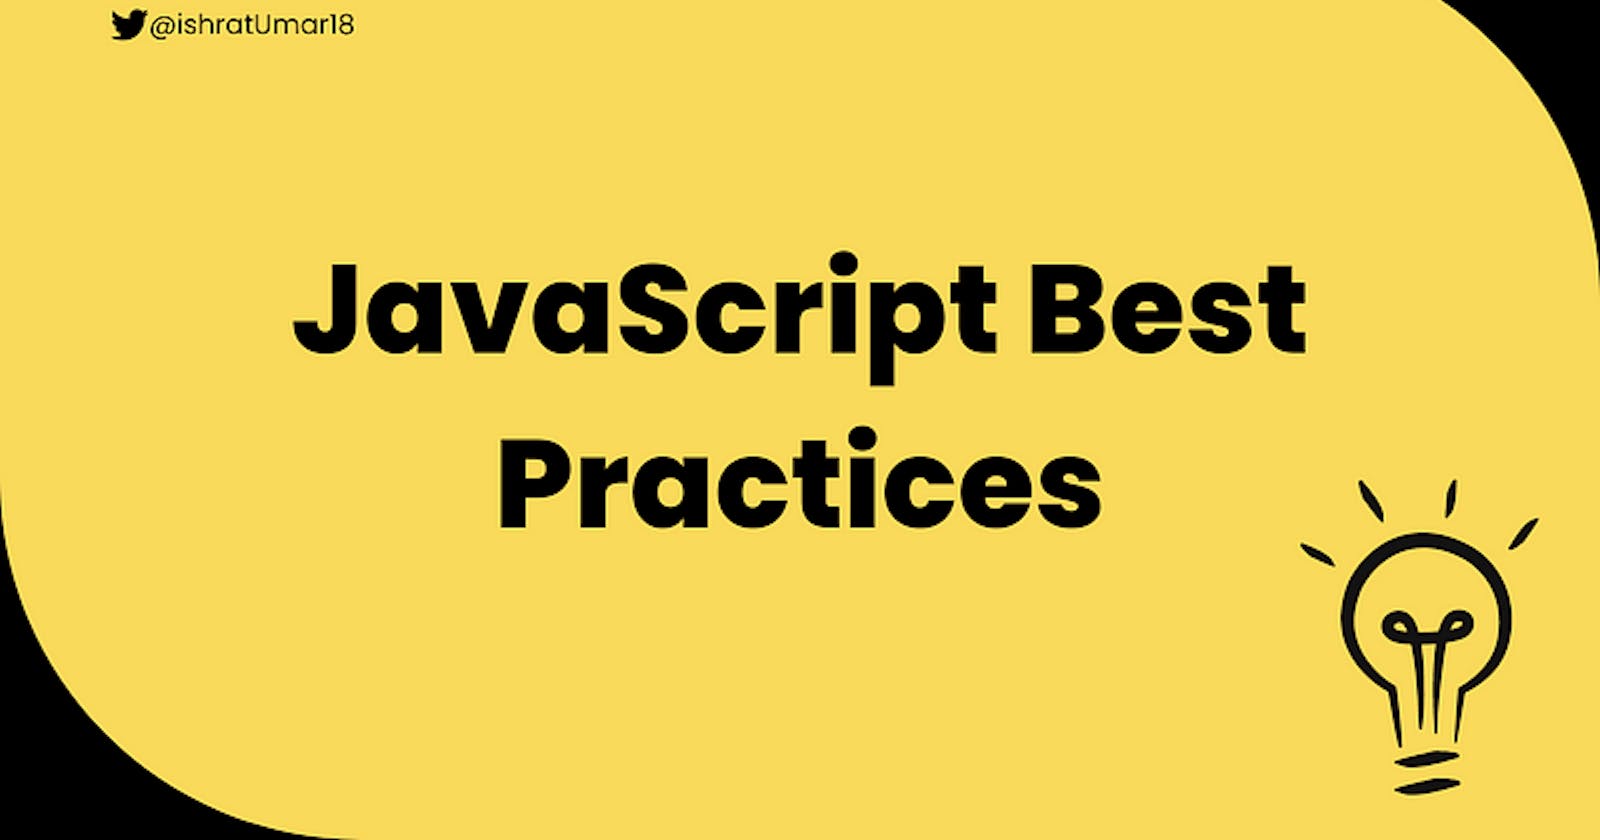 13 JavaScript Best Practices